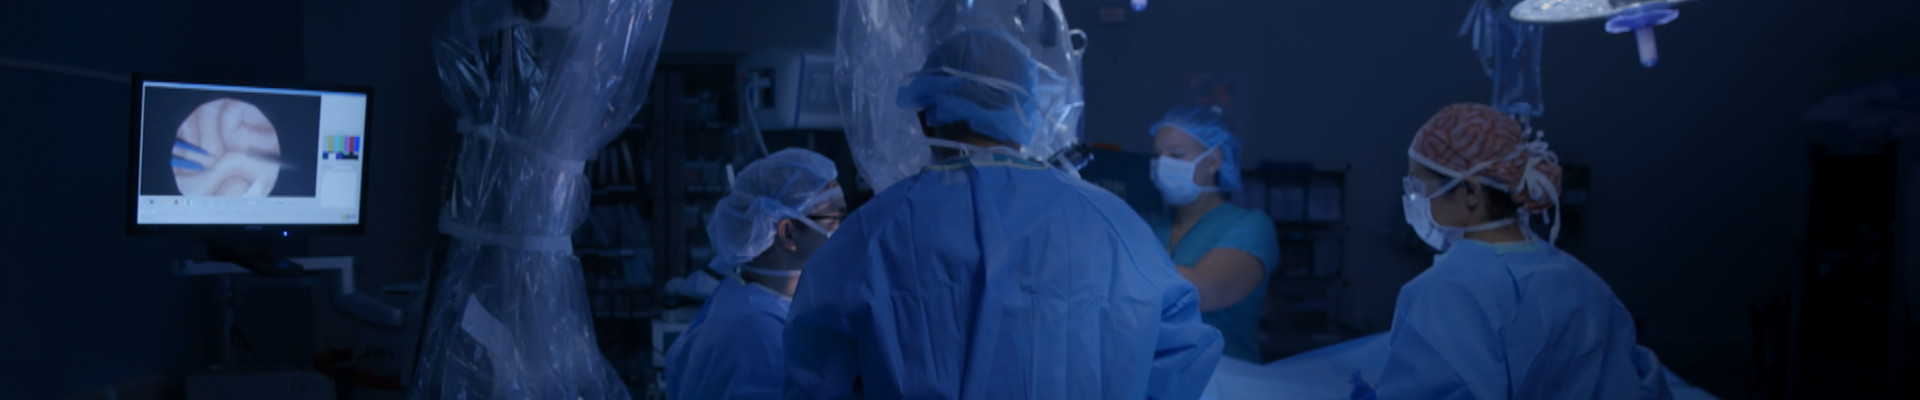 Neurosurgeons practicing surgery